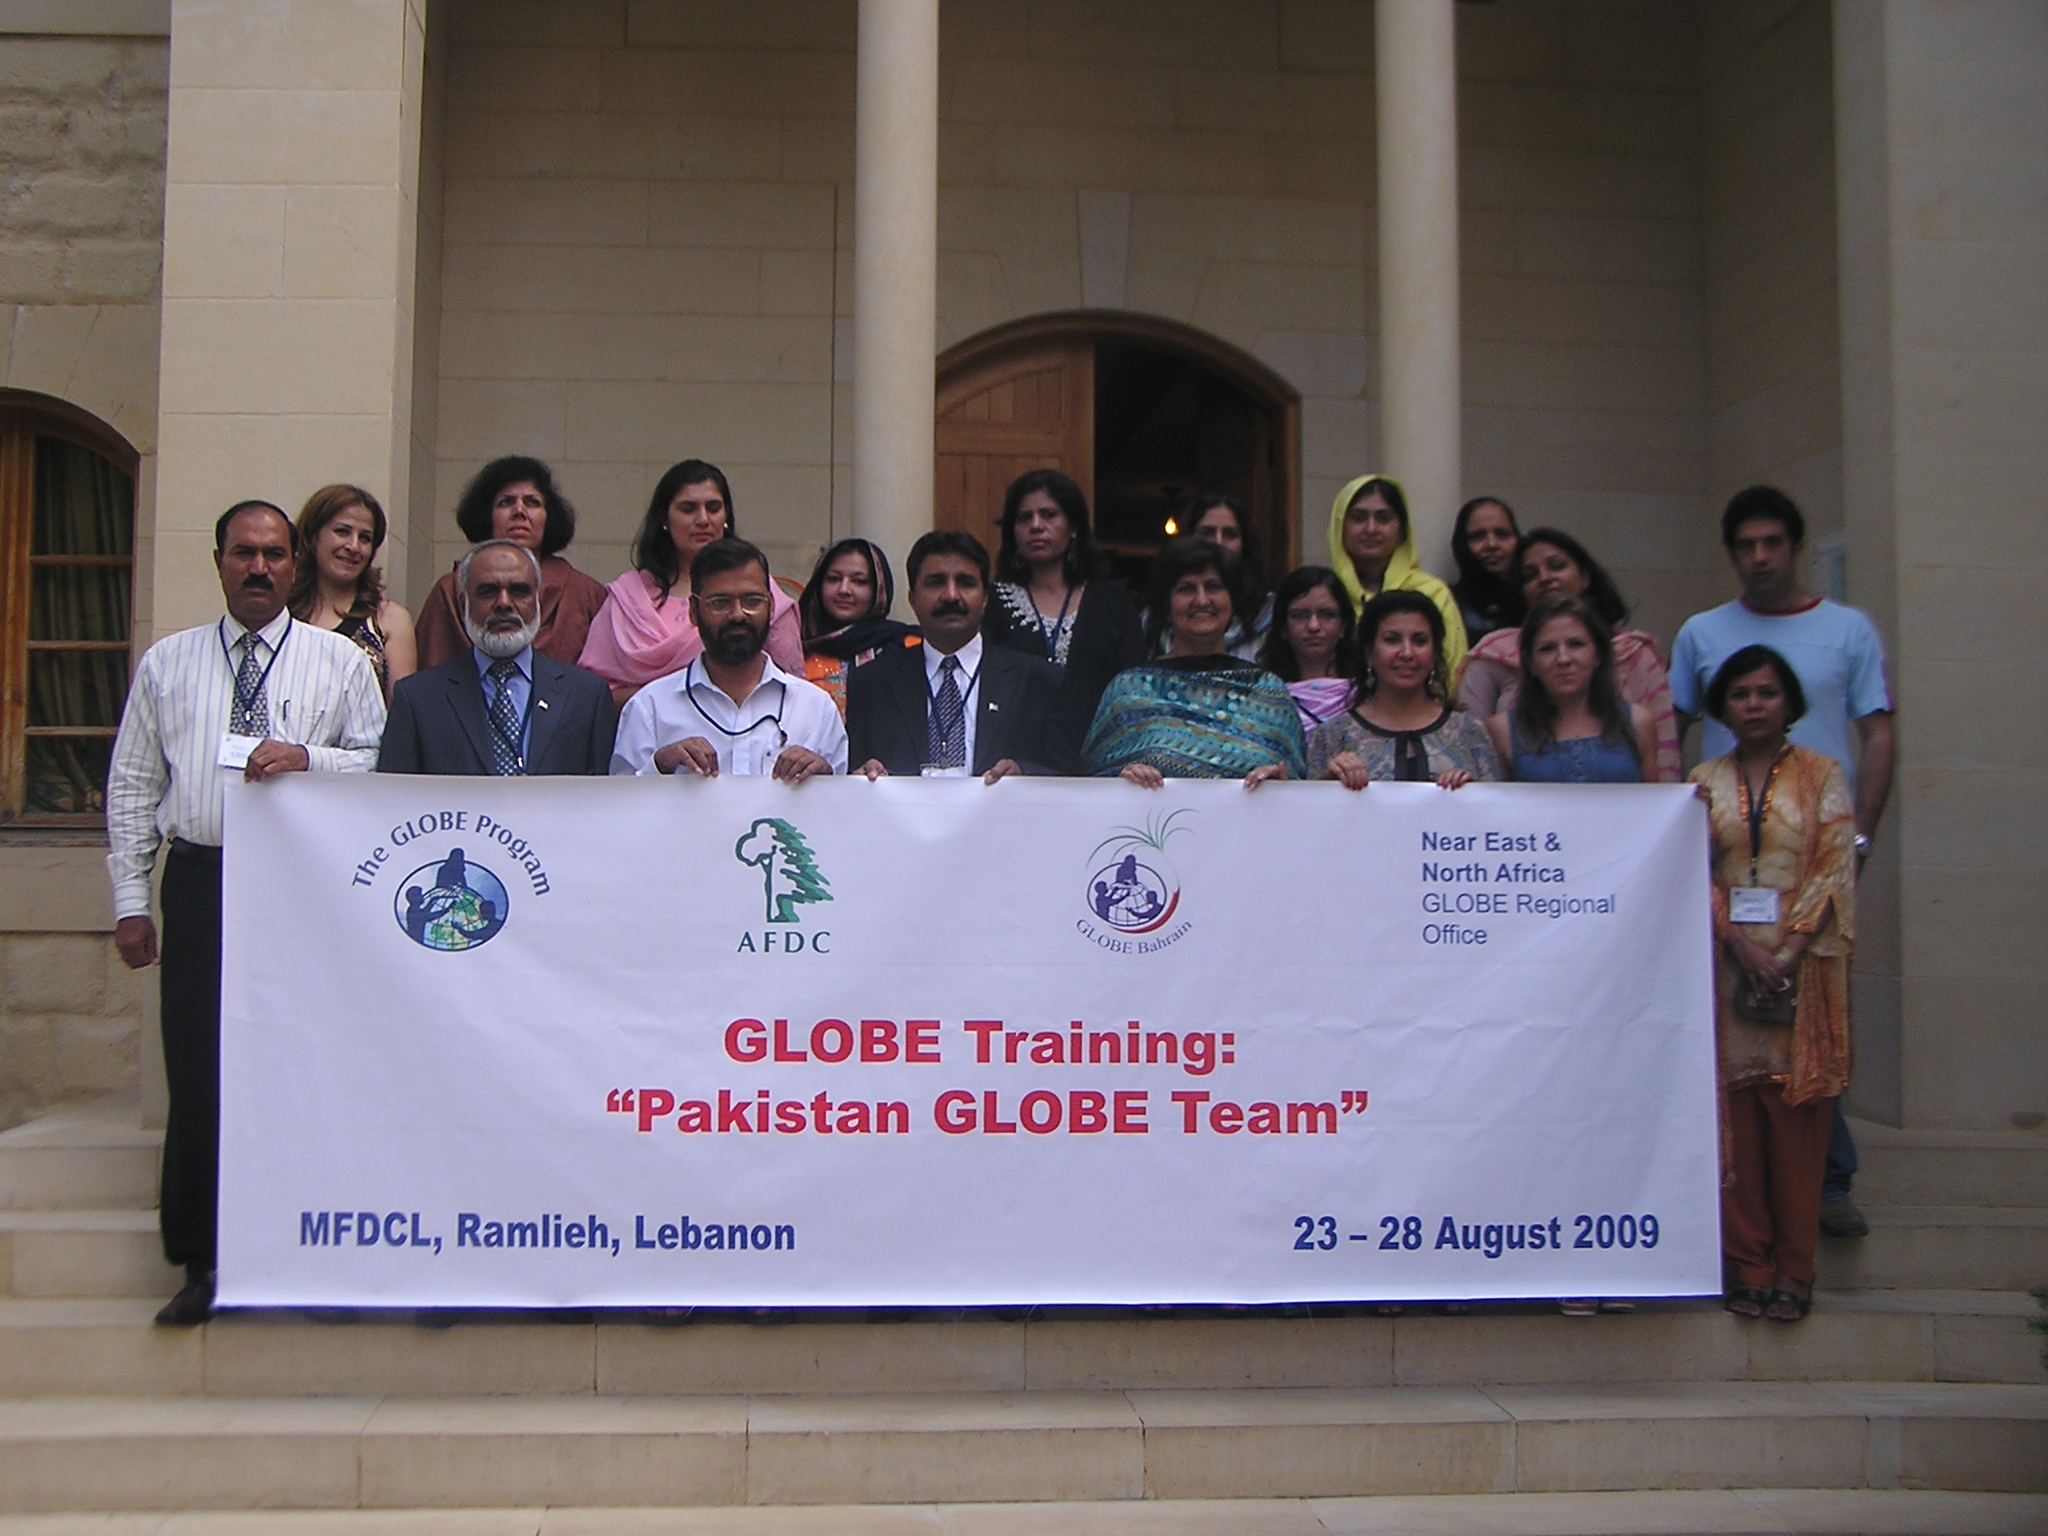 Pakistan joined the GLOBE Program